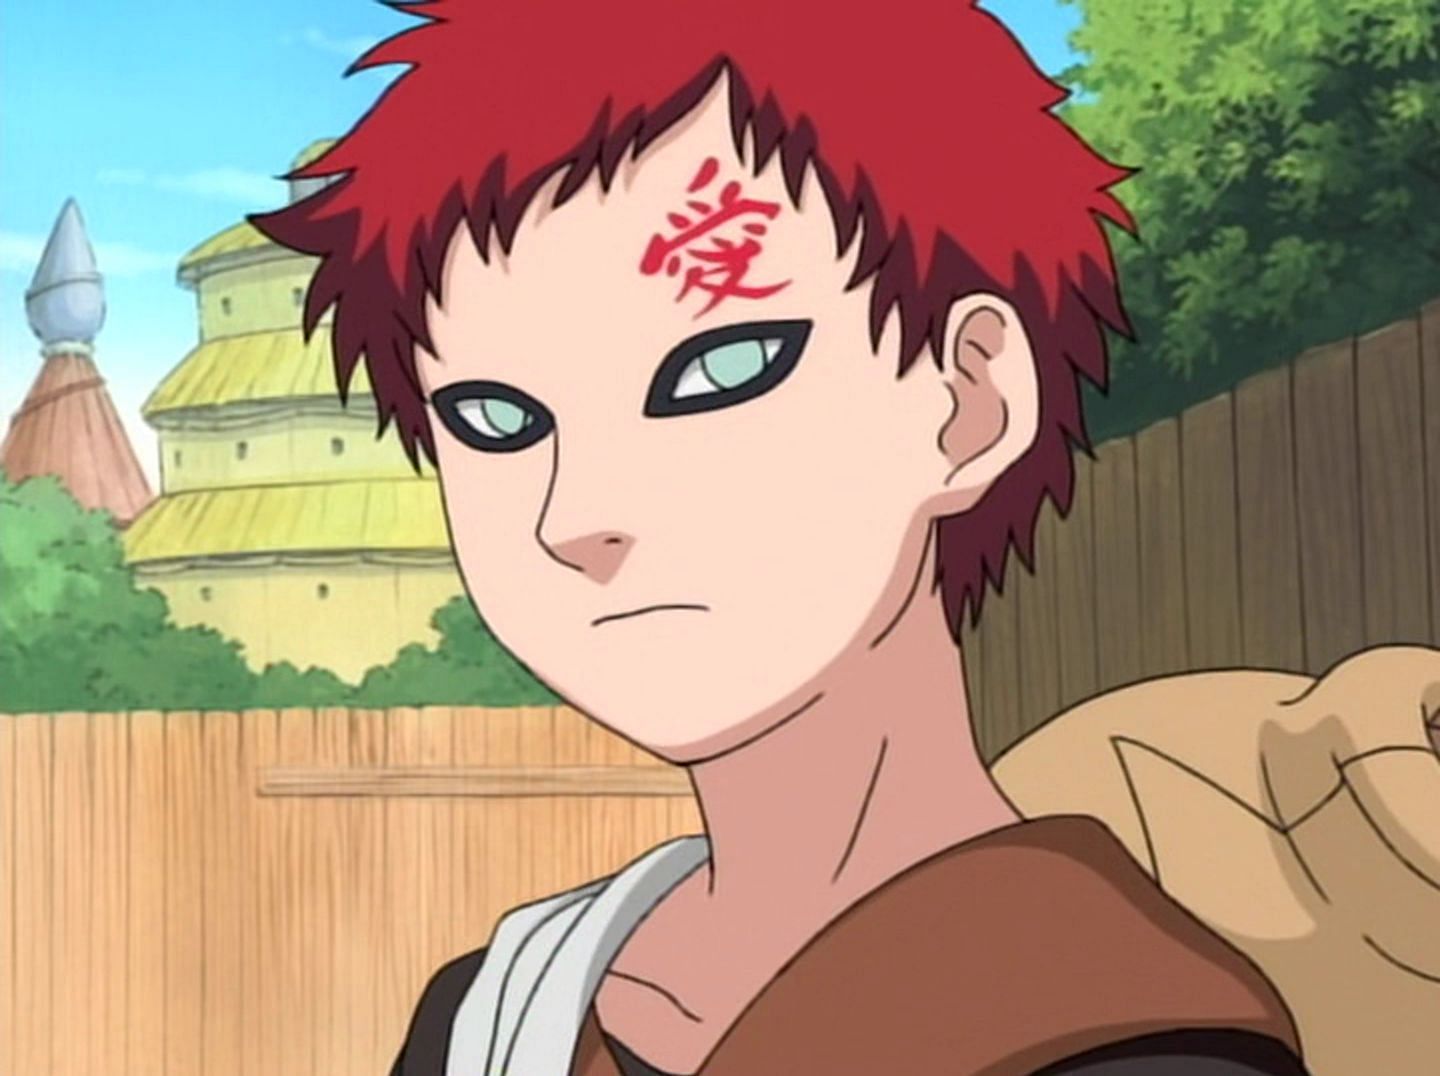 Gaara from the Naruto series (image via Pierrot)